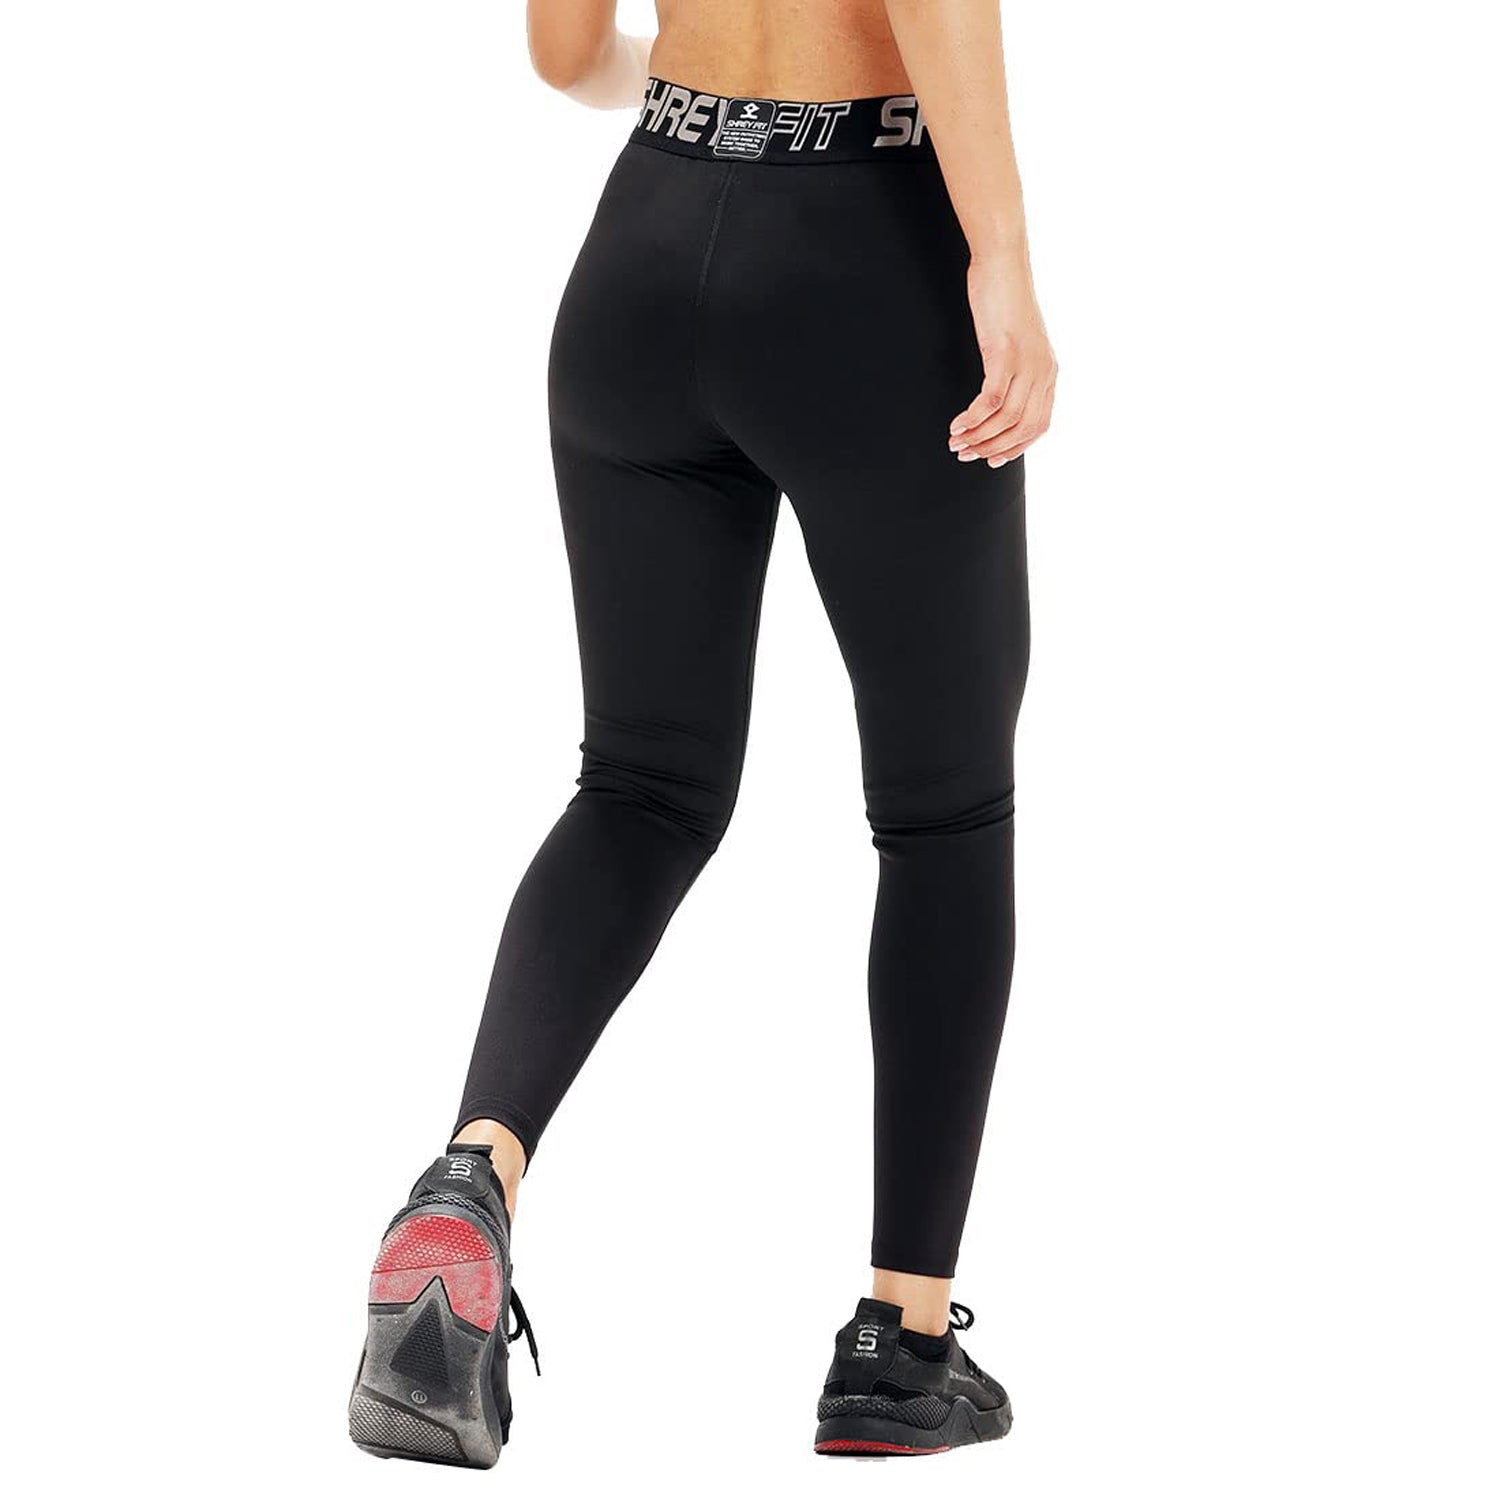 L.LEGGINGS FLOSS Sports leggings - Women - Diadora Online Store US